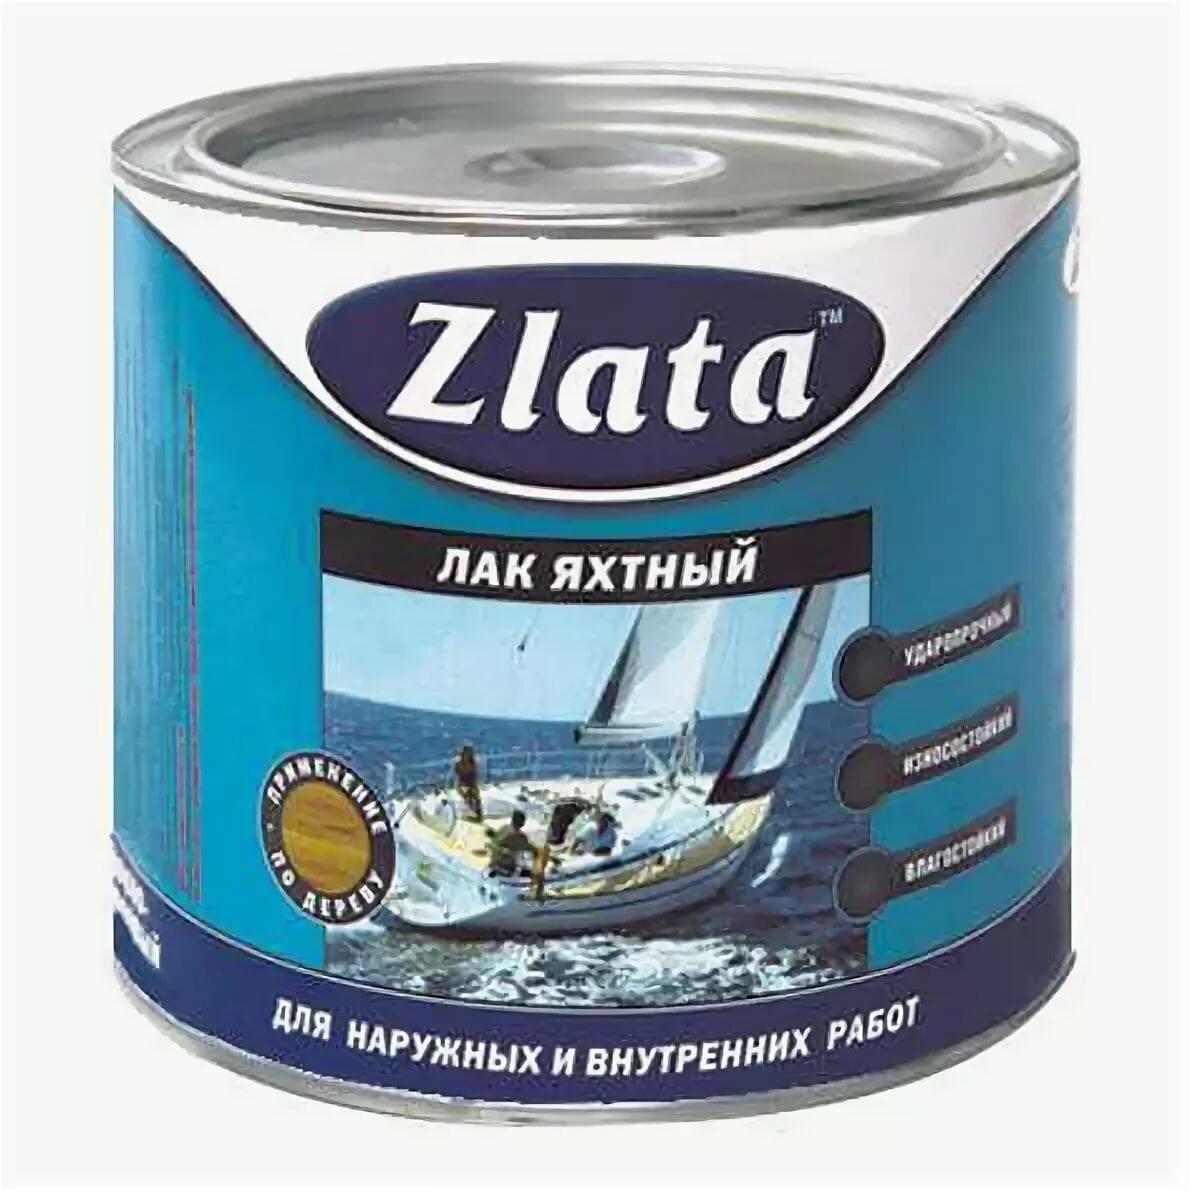 Zlata Лак яхтный Zlata глянцевый 1,8 кг